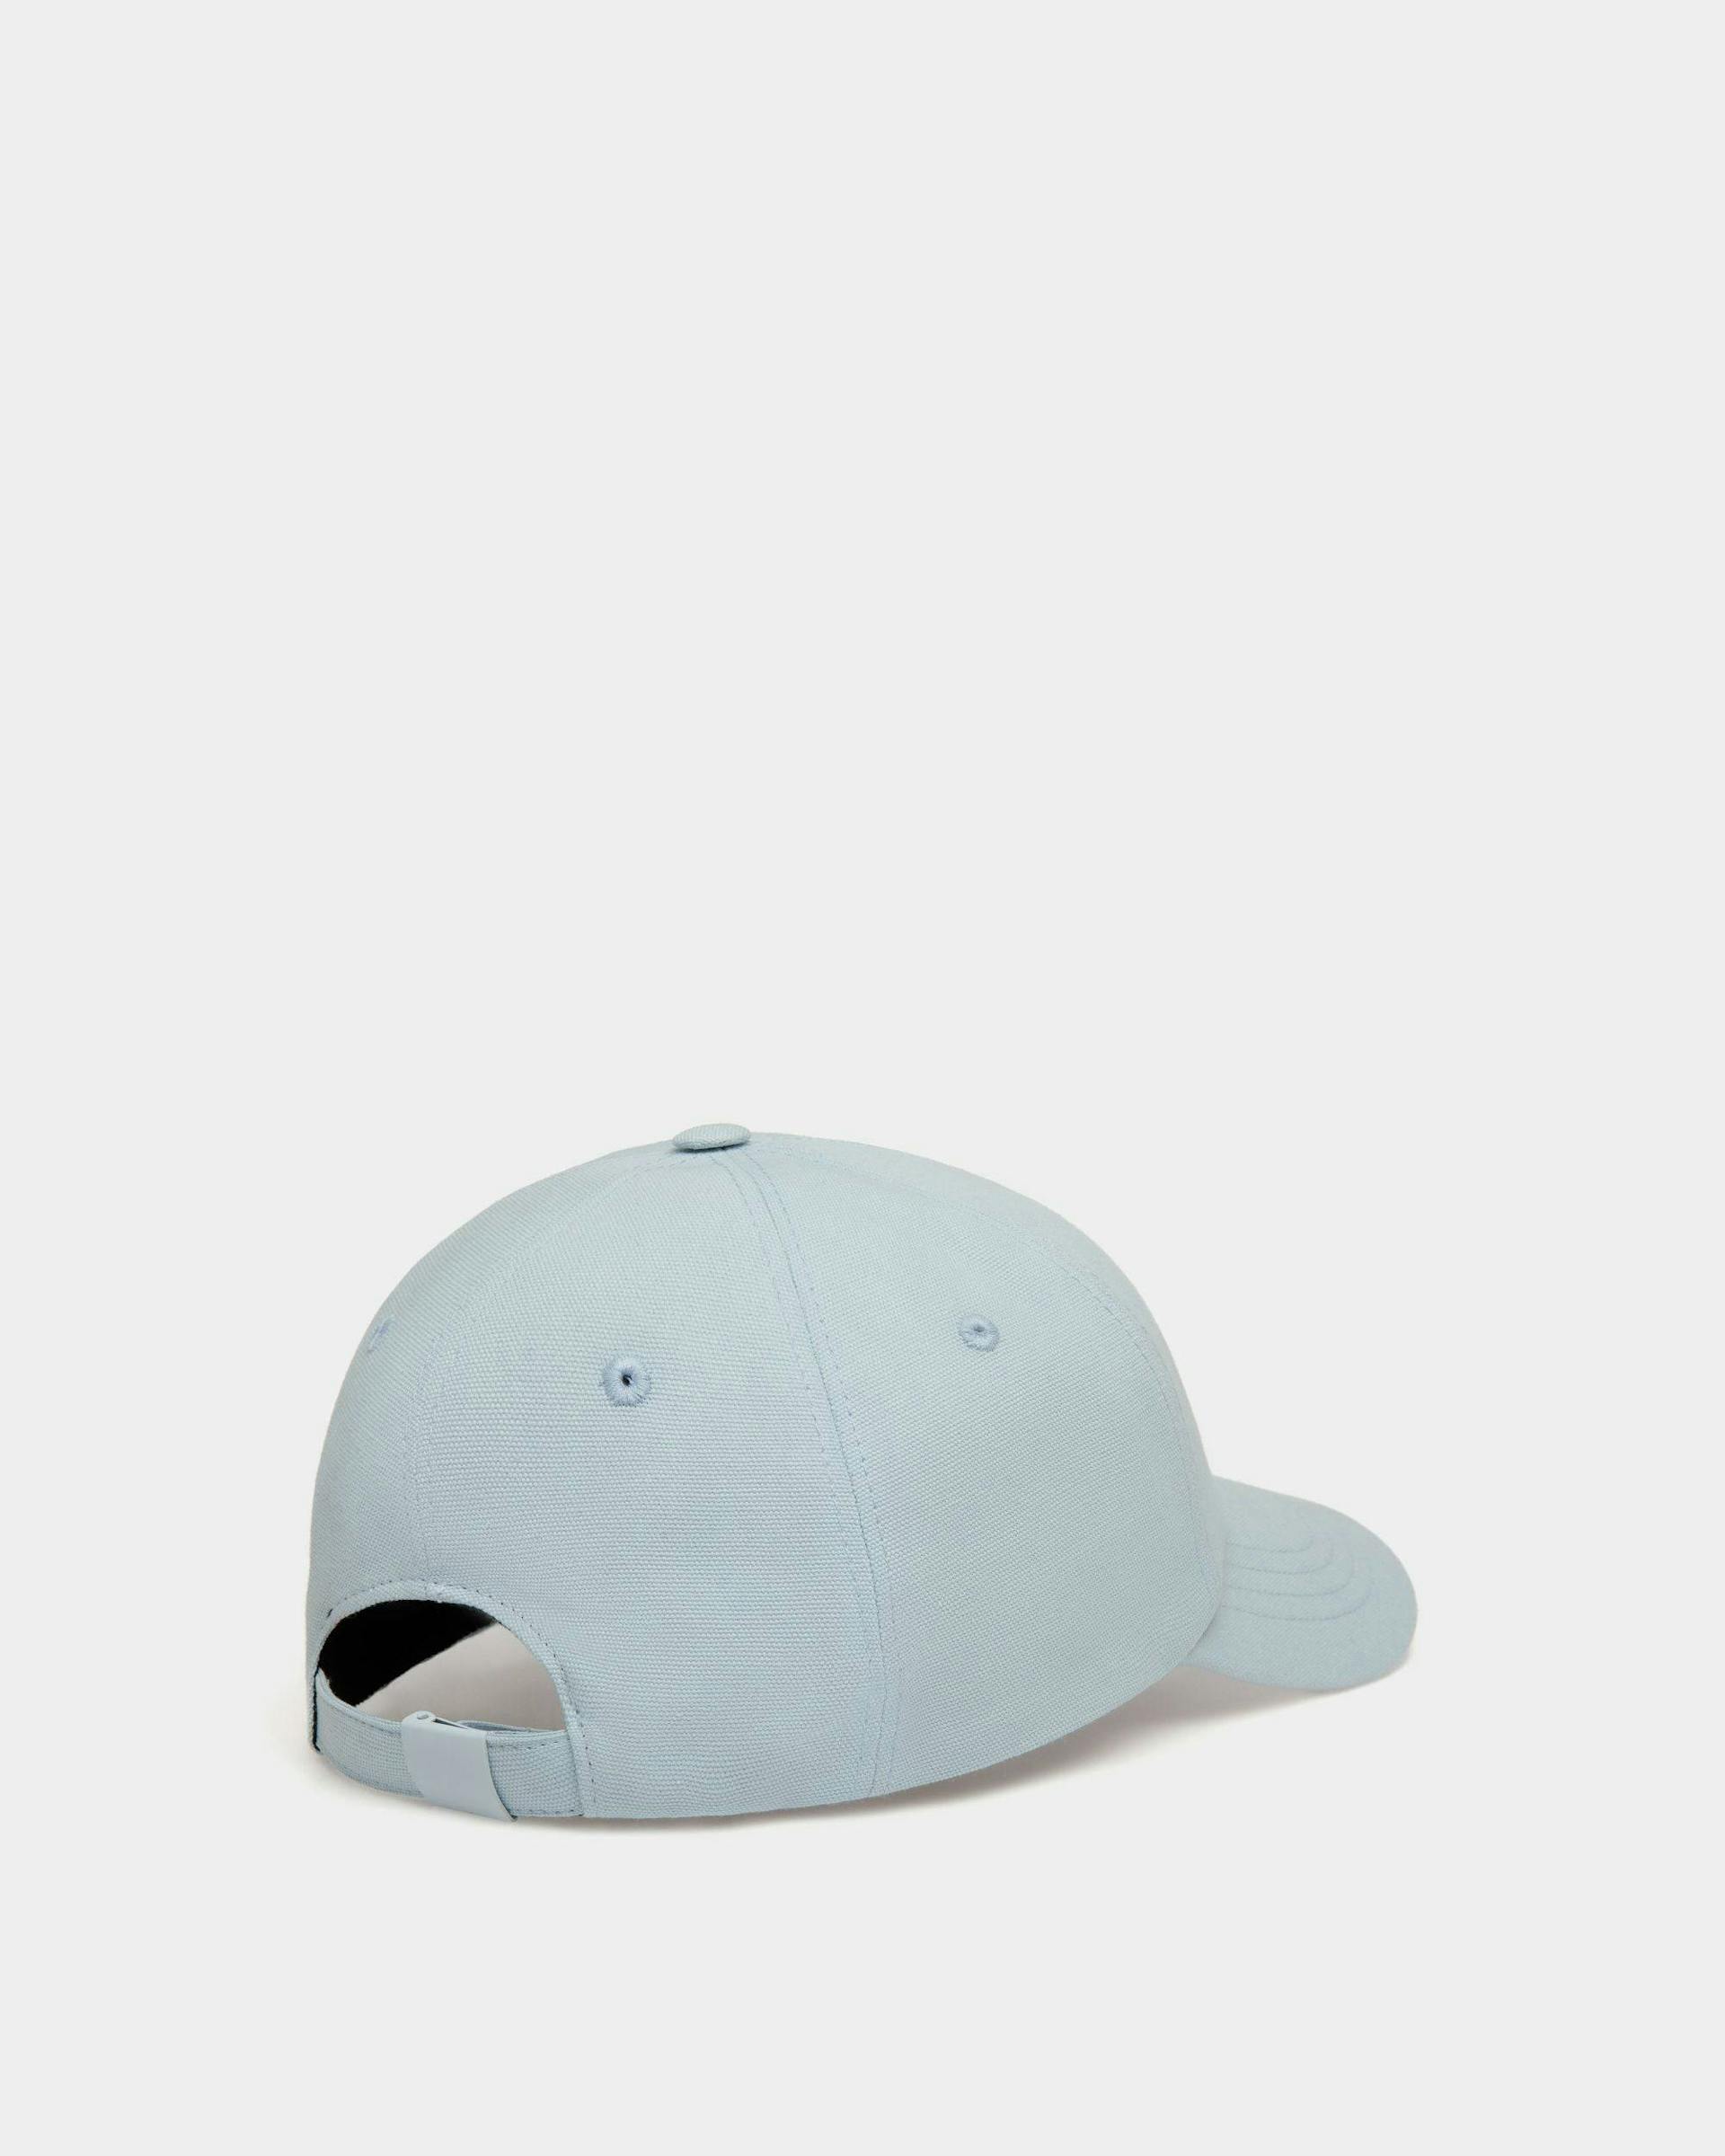 Women's Baseball Hat in Light Blue Cotton | Bally | Still Life 3/4 Back